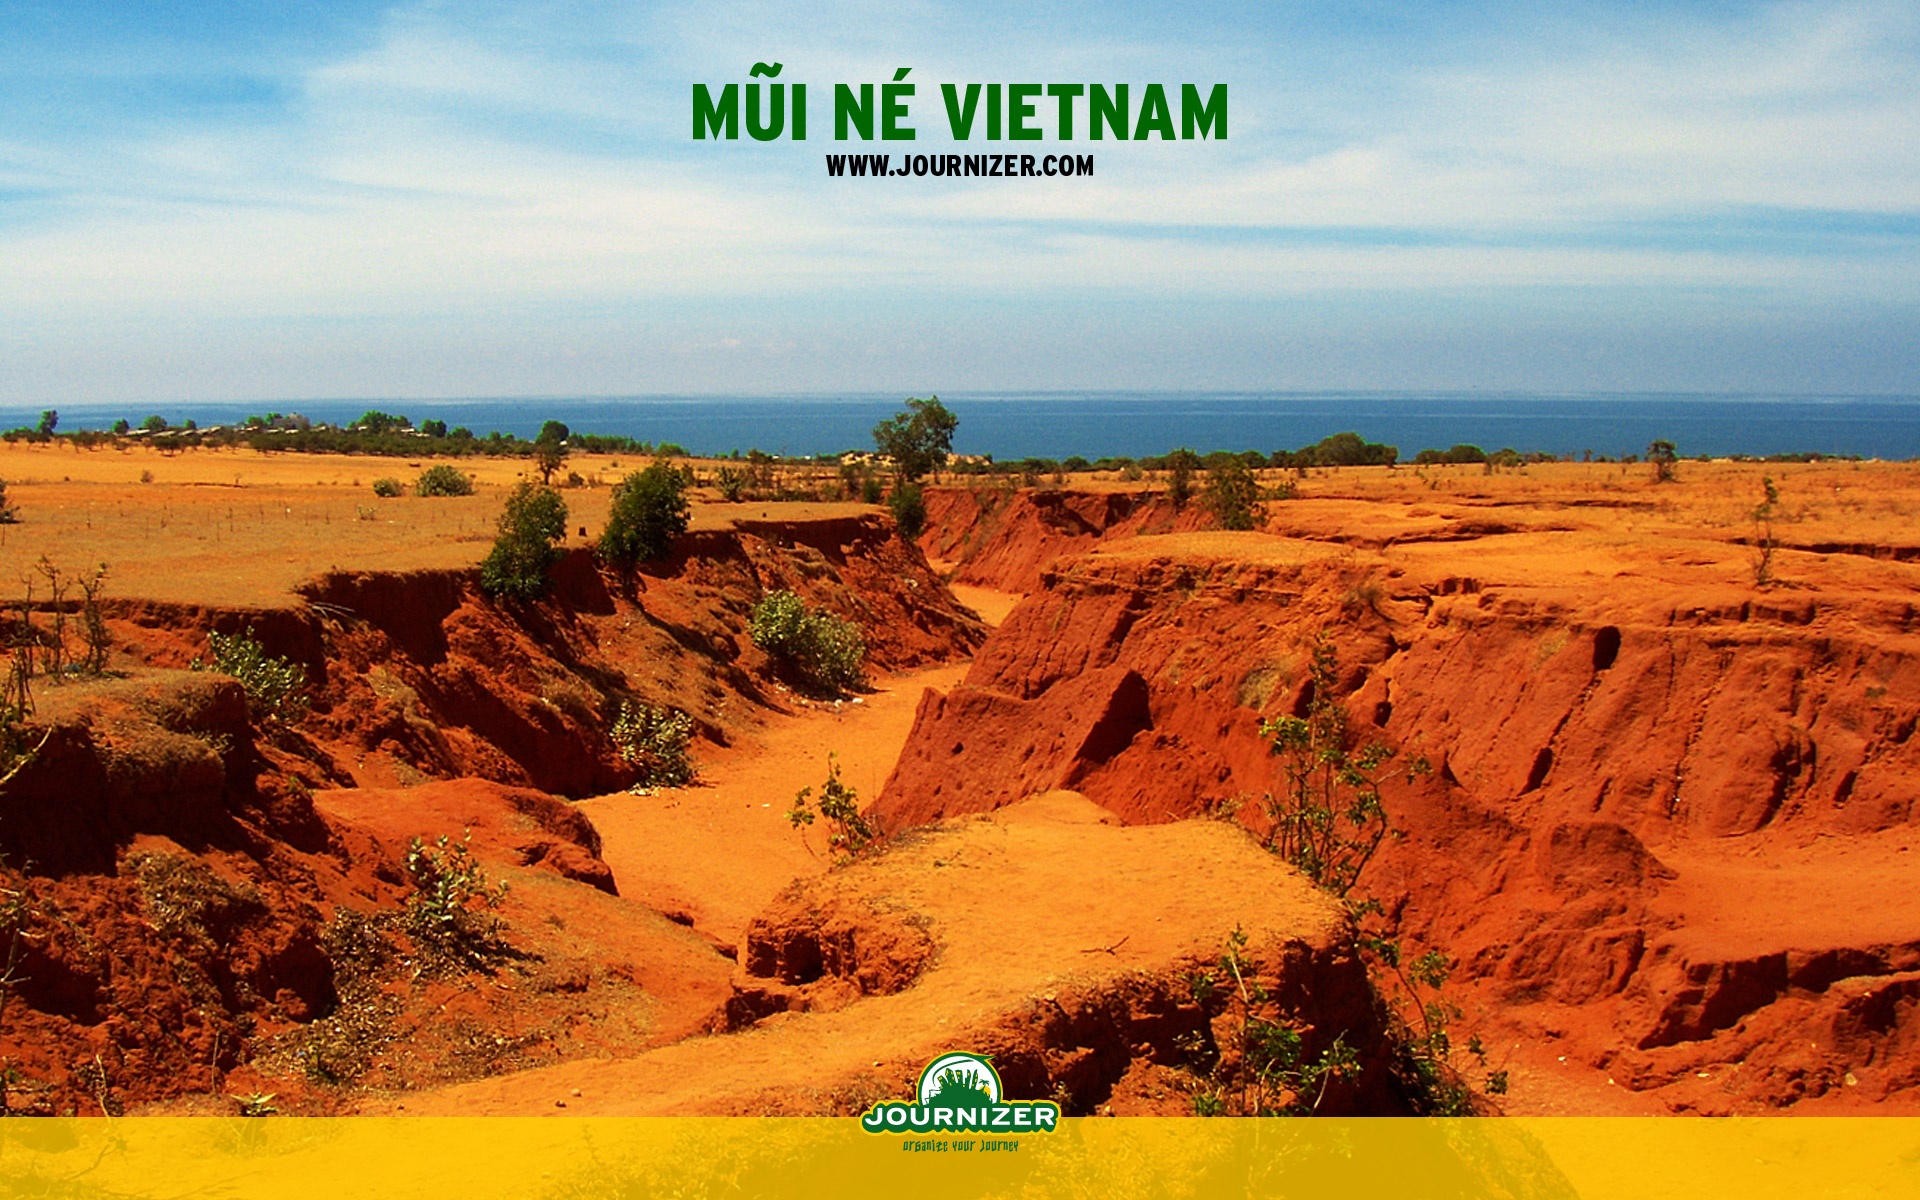 Mui Ne Vietnam Wallpaper And Image Pictures Photos